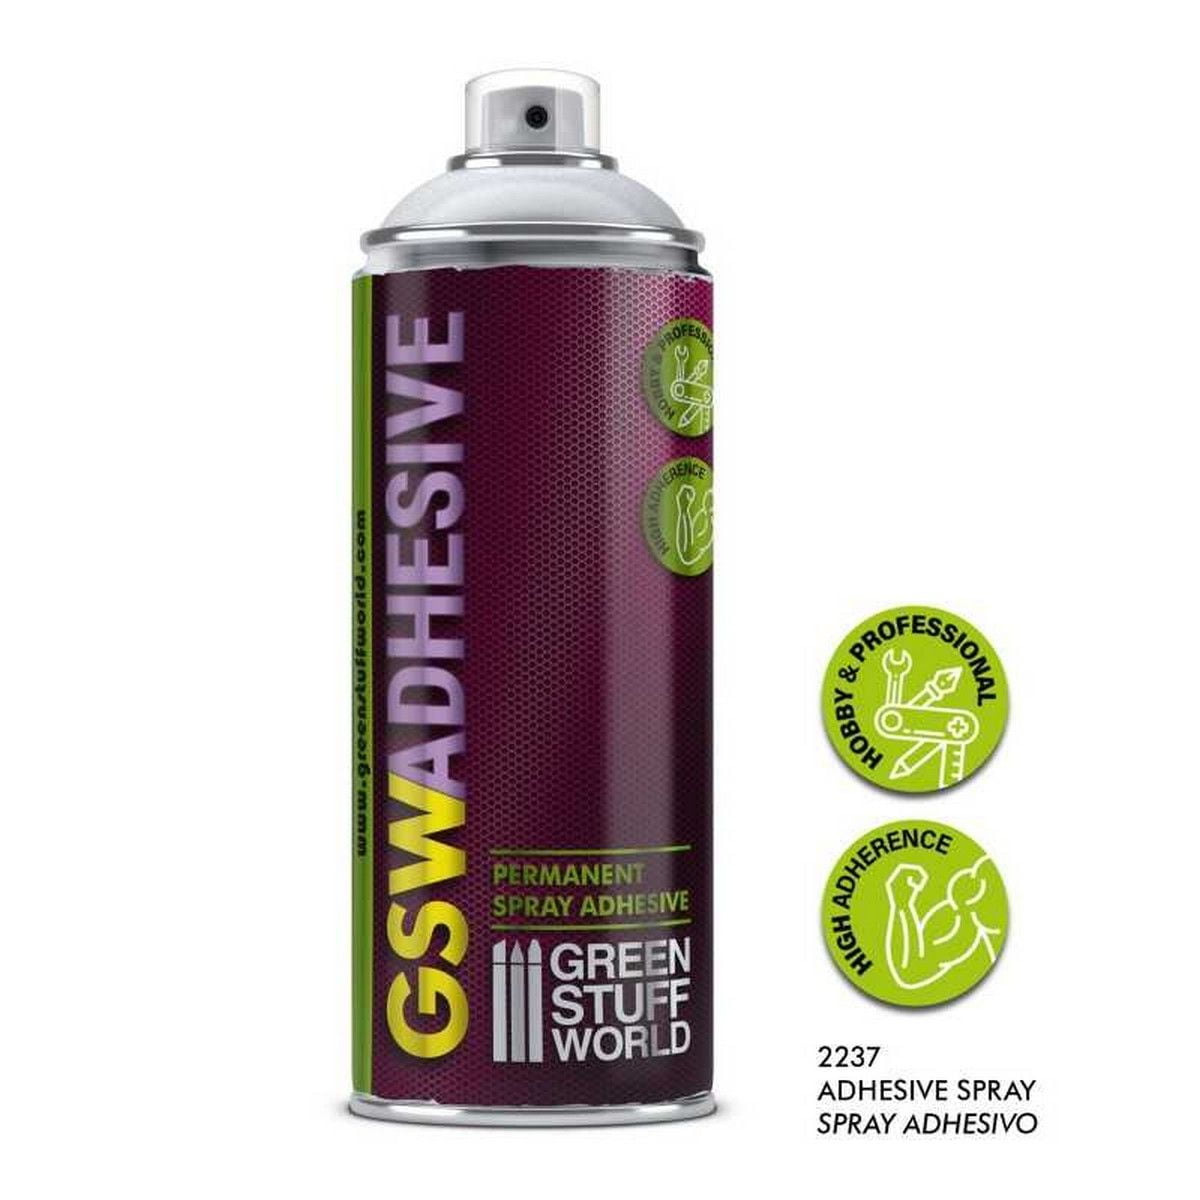 Adhesive Spray 400ml